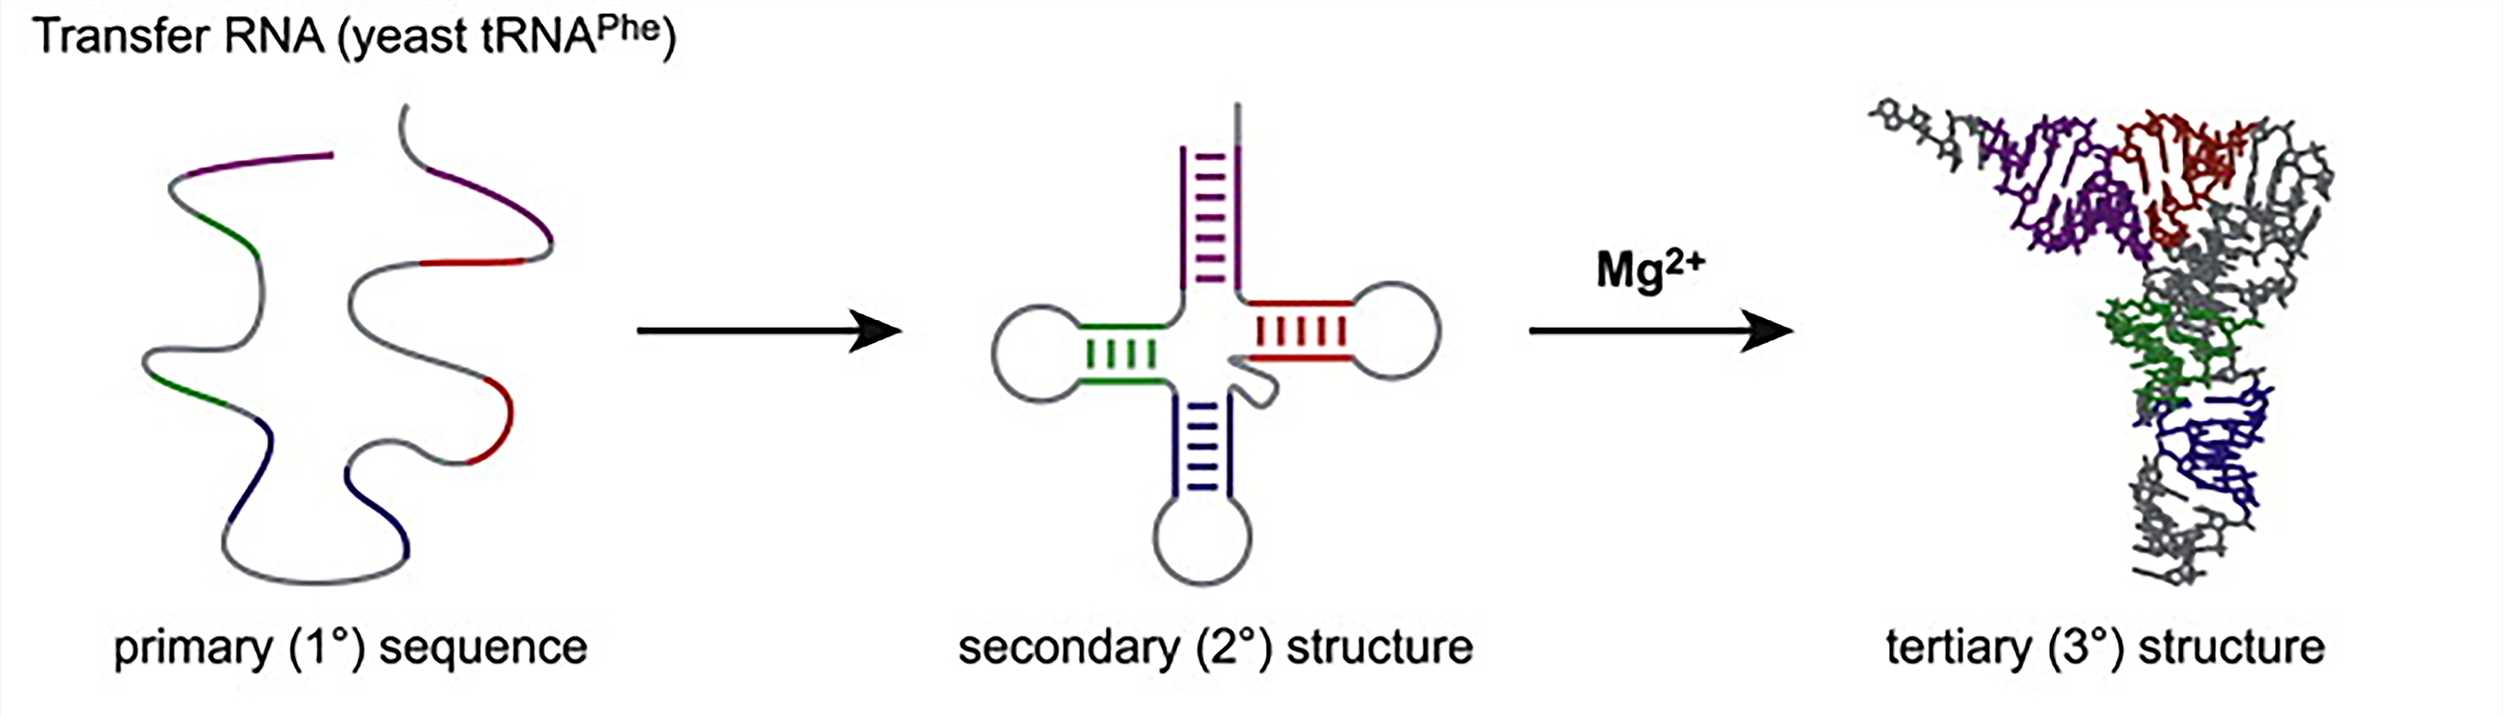 RNA folding hierarchy (take transfer RNA as an example)